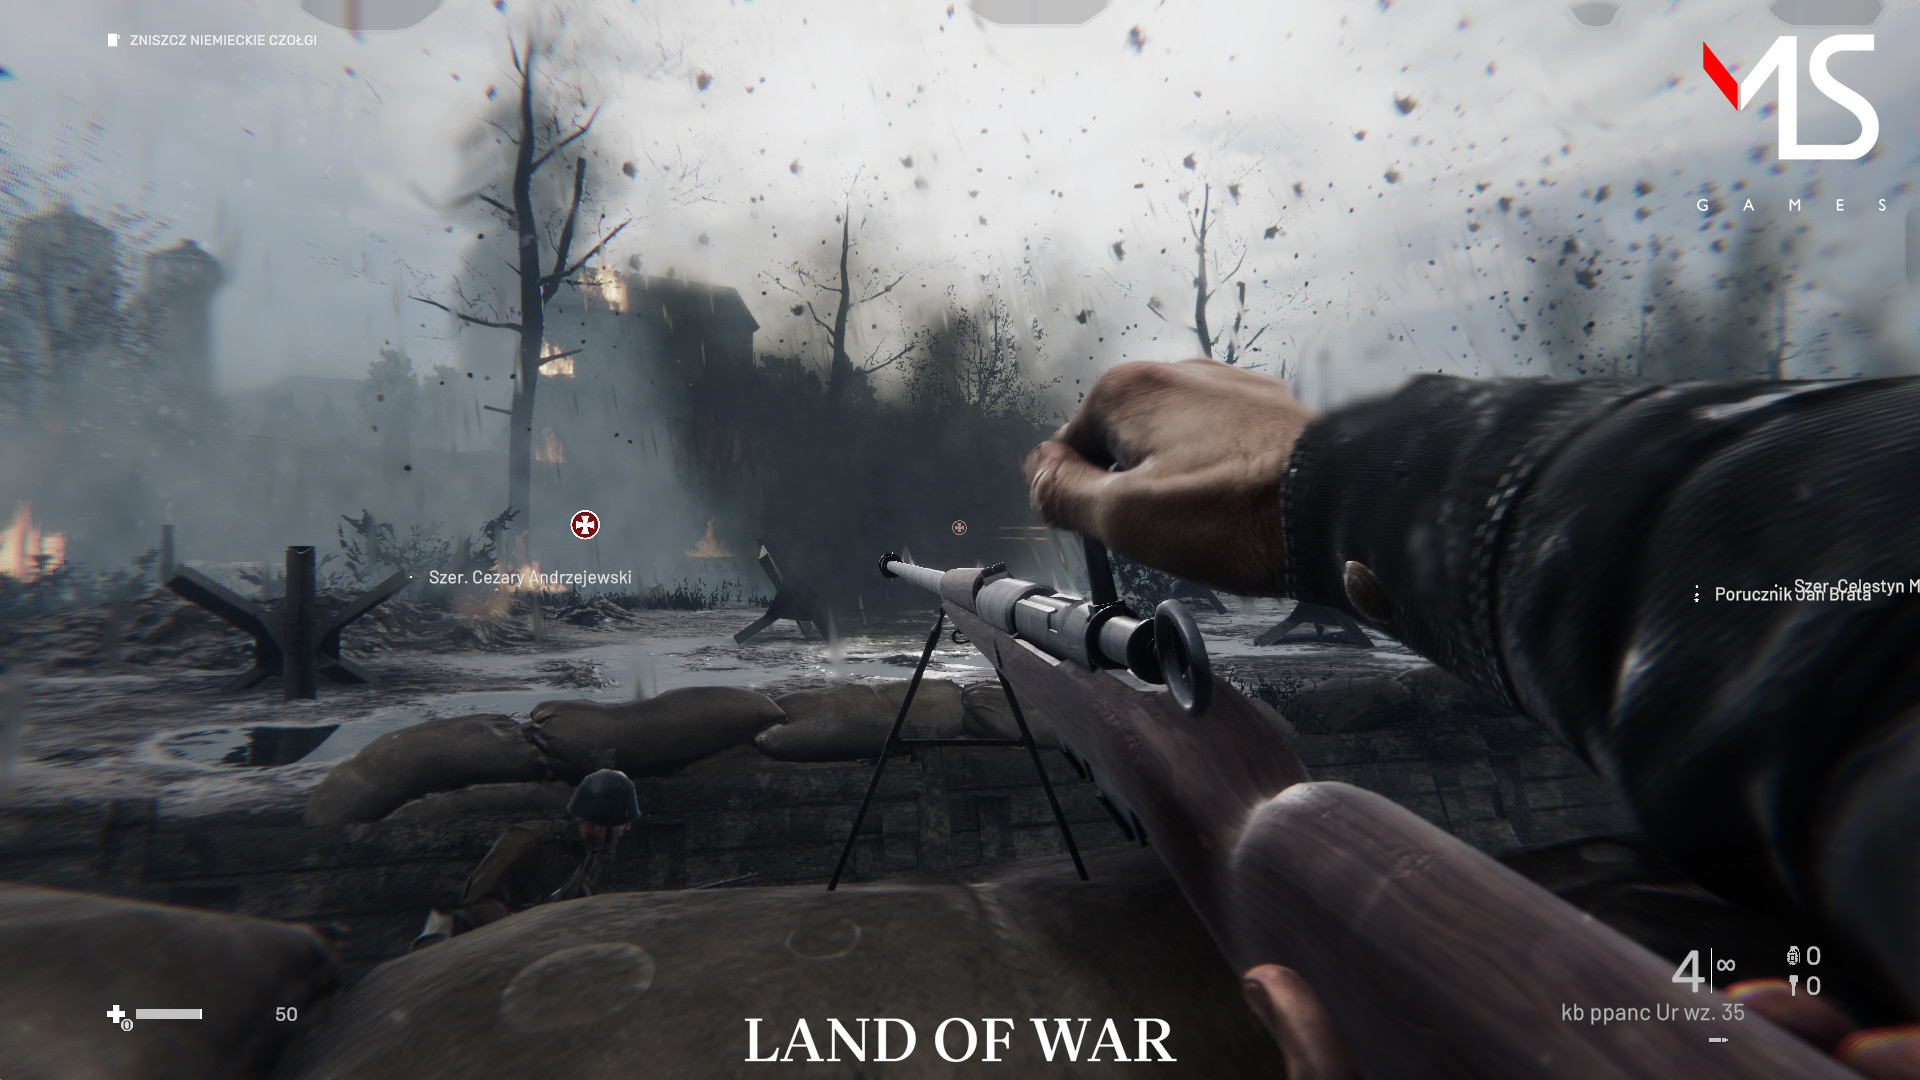 Land of War - The Beginning Resimleri 